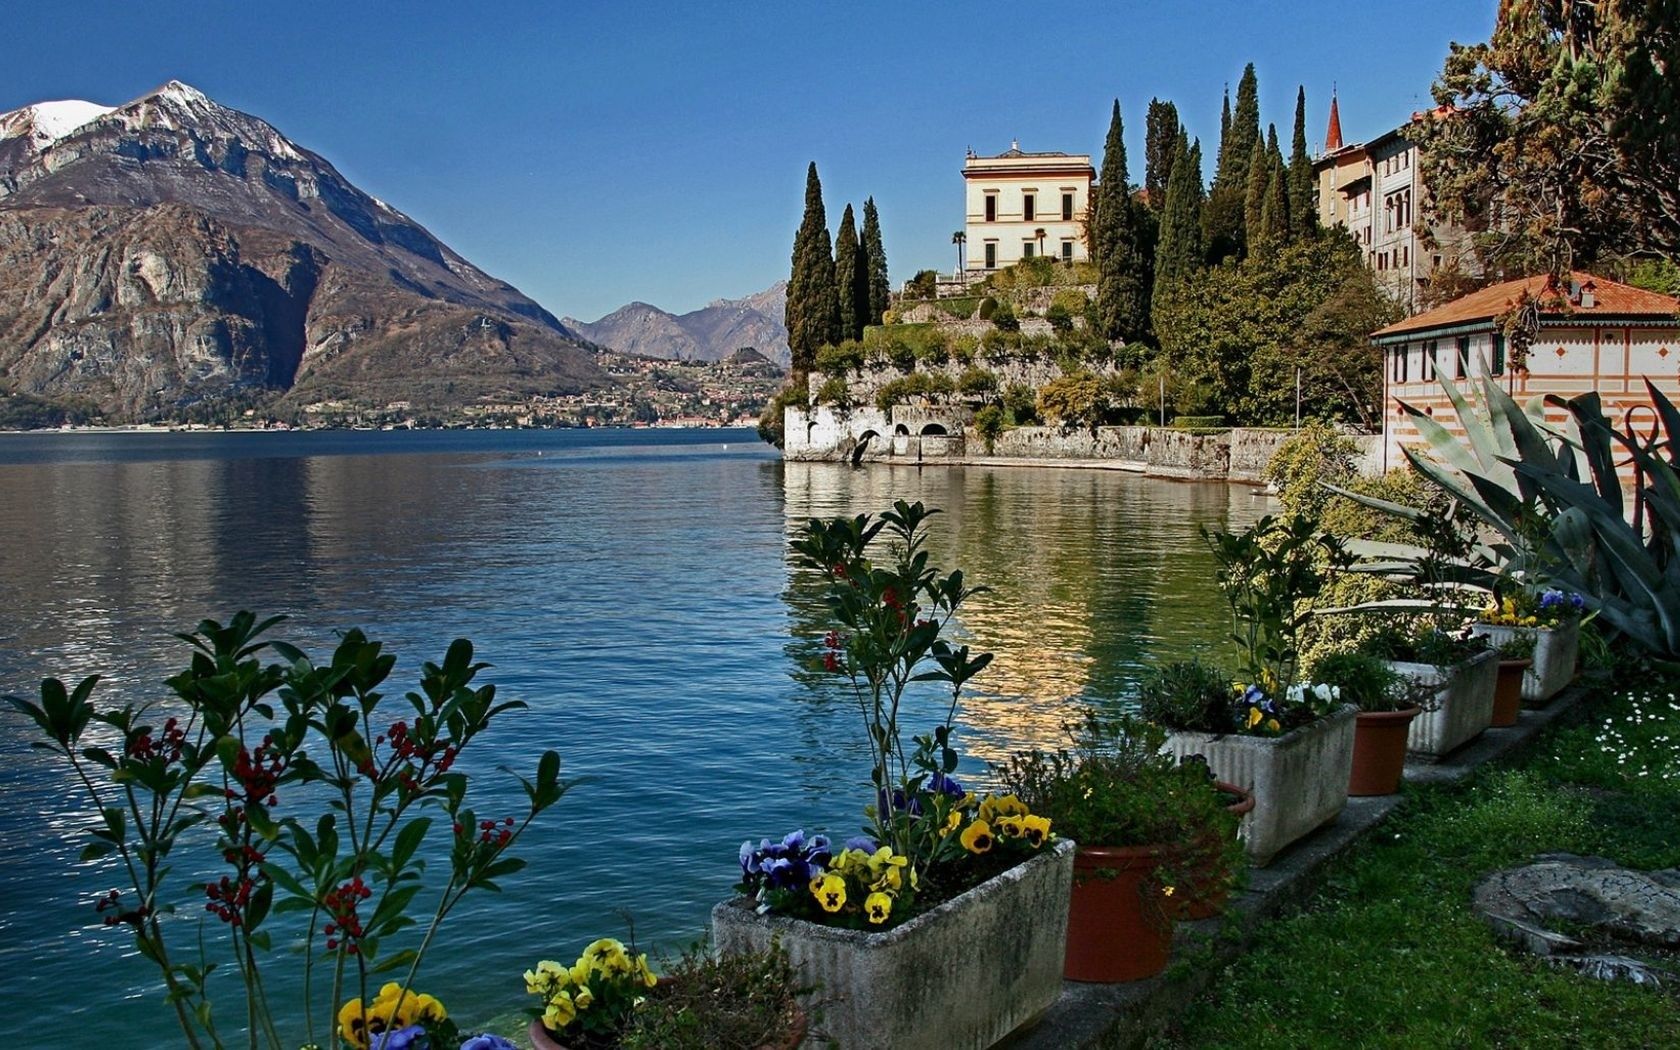 Villa Monastero, On the shore of Lake Como, Italy Wallpaper